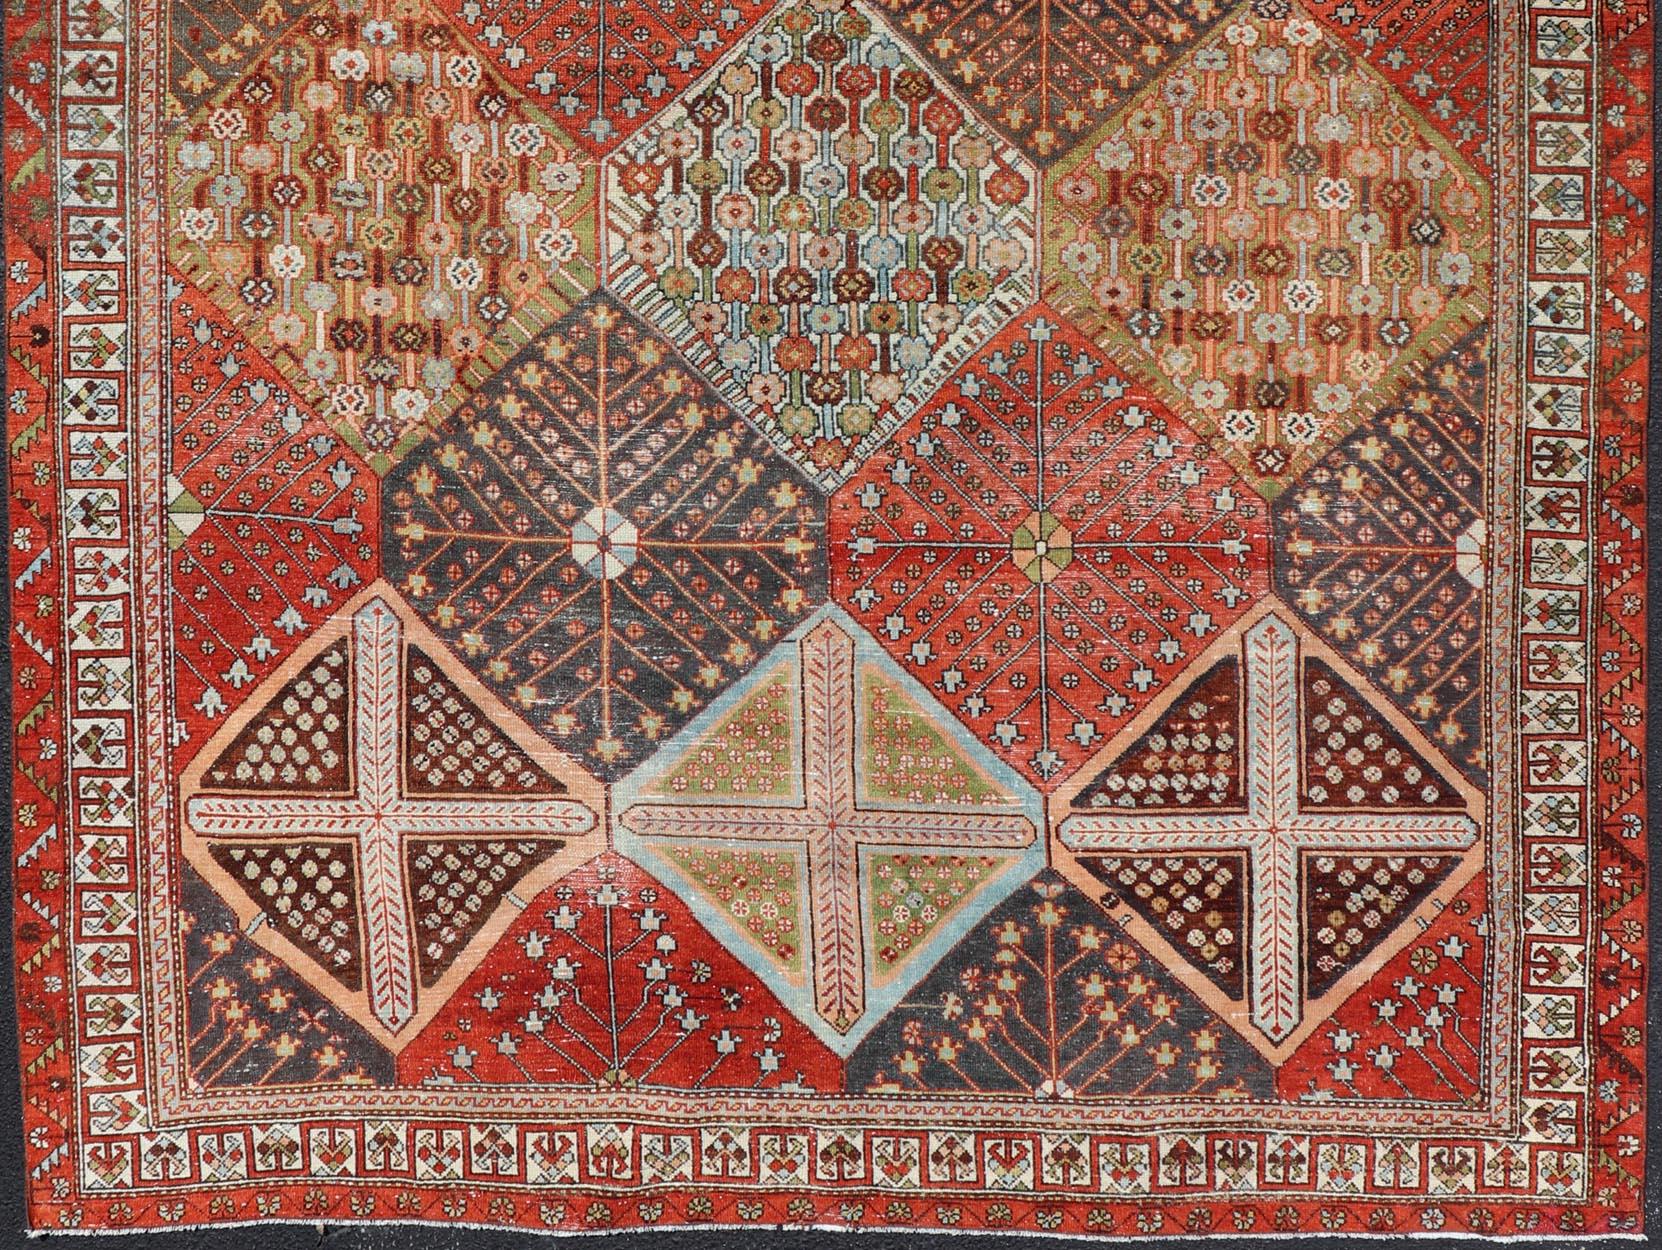 Antique Persian All-Over Large Diamond Design Bakhtiari Rug in Multi Colors 3